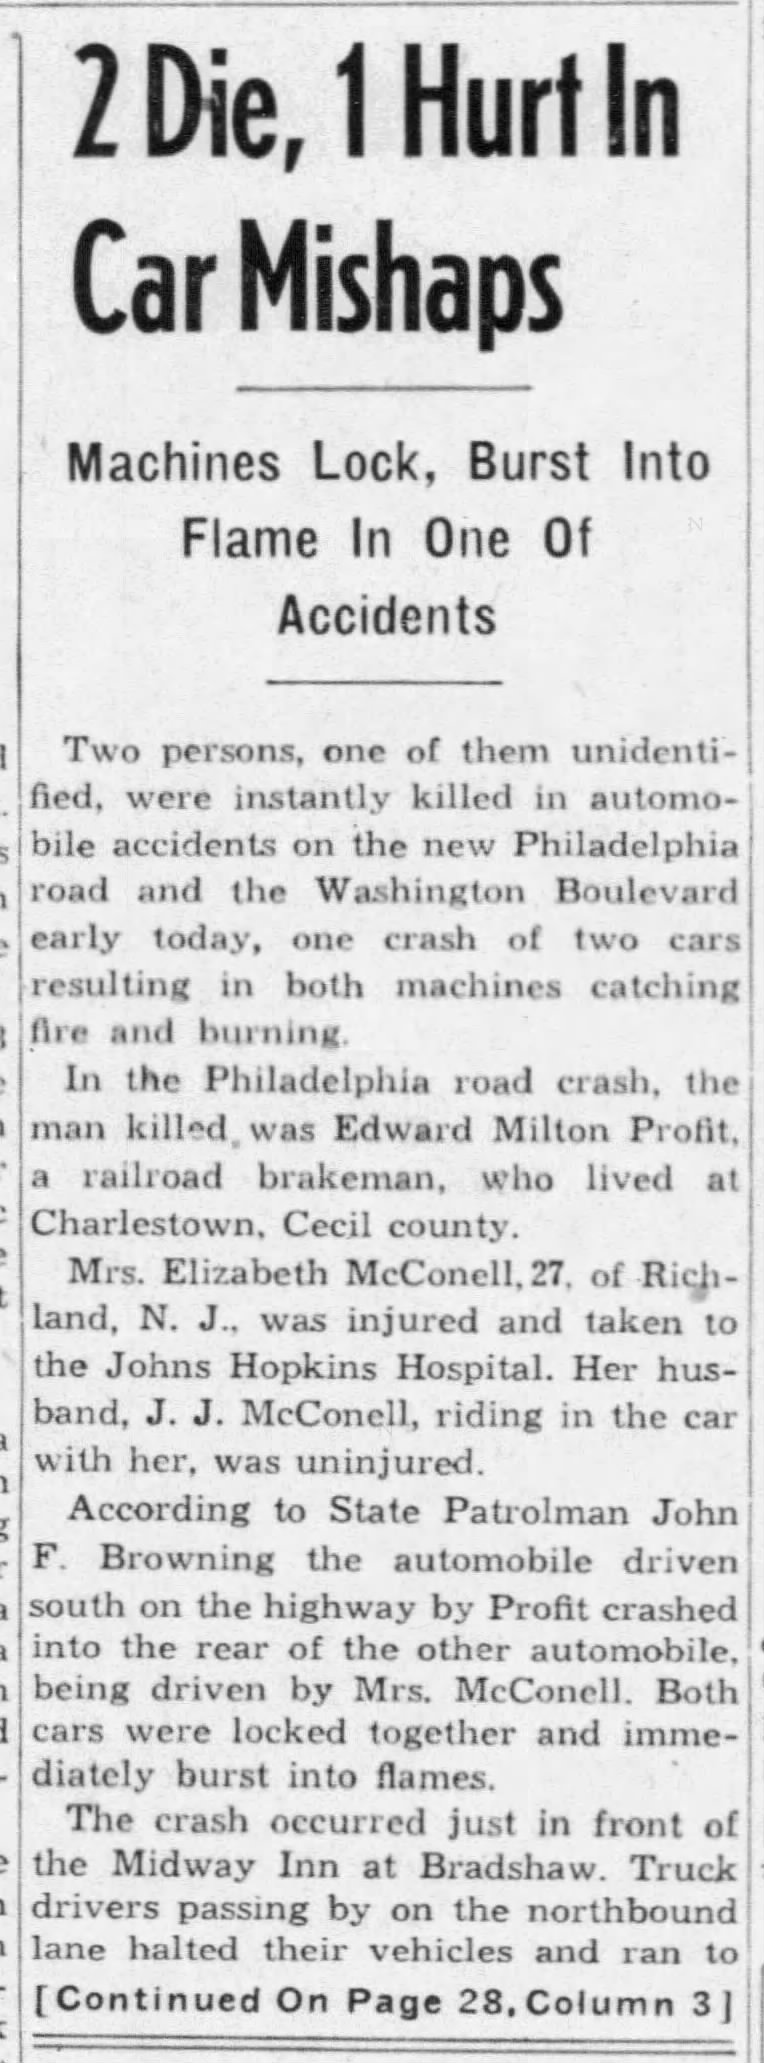 Man killed pt 1, The Evening Sun, Baltimore, Maryland, 23 Dec 1941, Tue